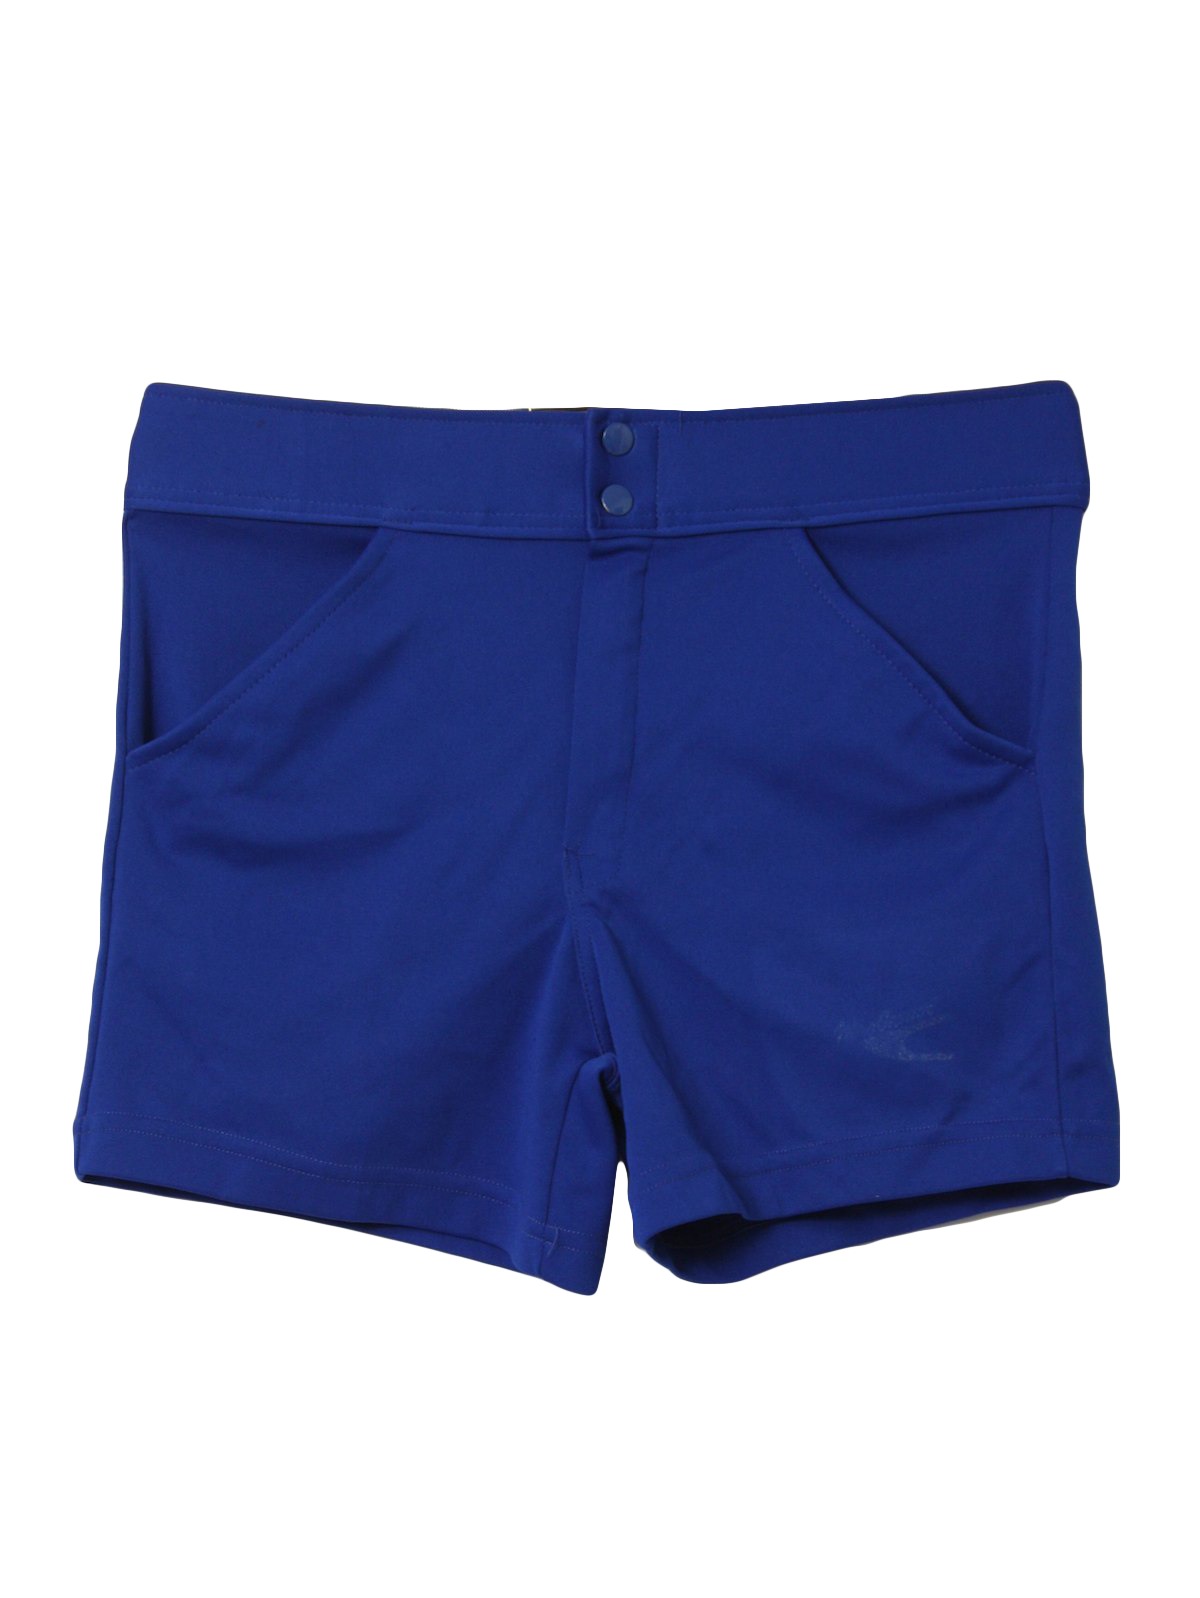 Retro 80's Shorts: 80s -Worn Label- Mens blue background stretch weave ...